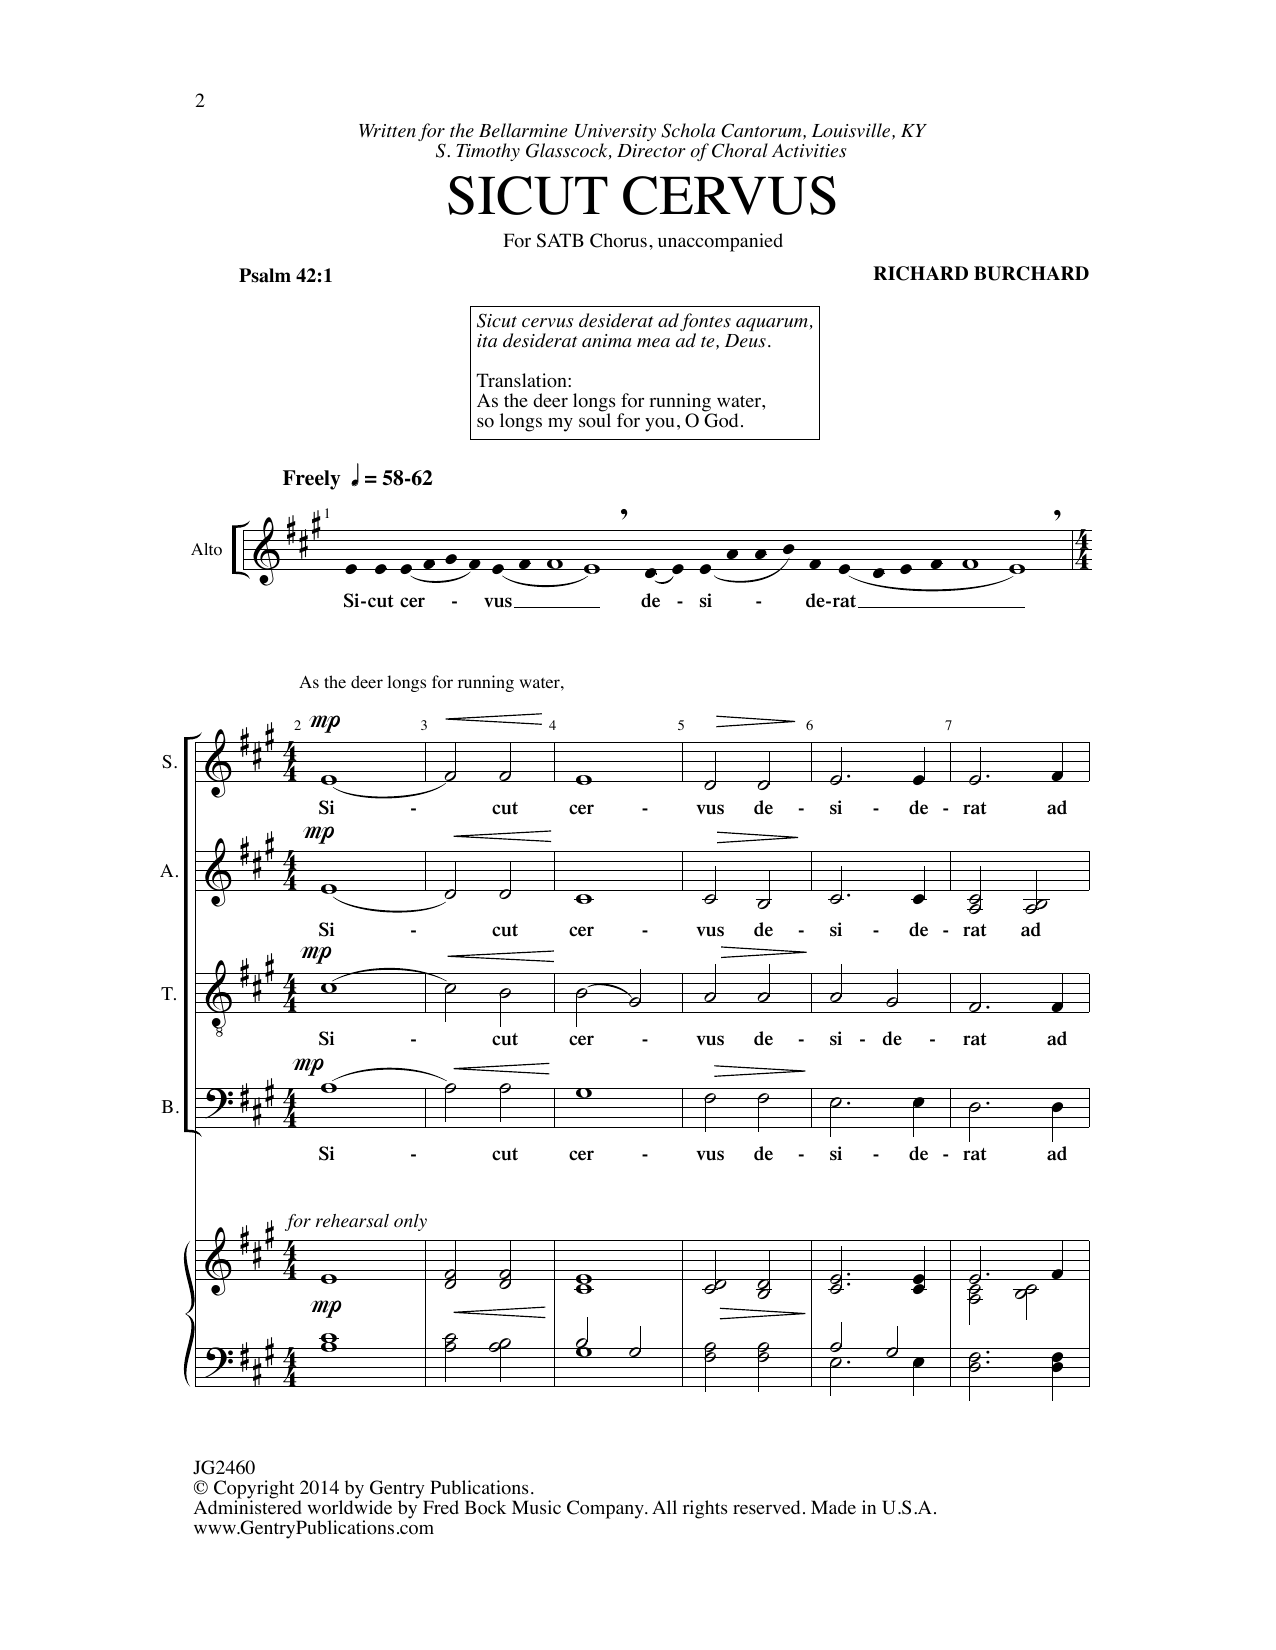 Richard Burchard Sicut Cervus Sheet Music Notes & Chords for Choral - Download or Print PDF